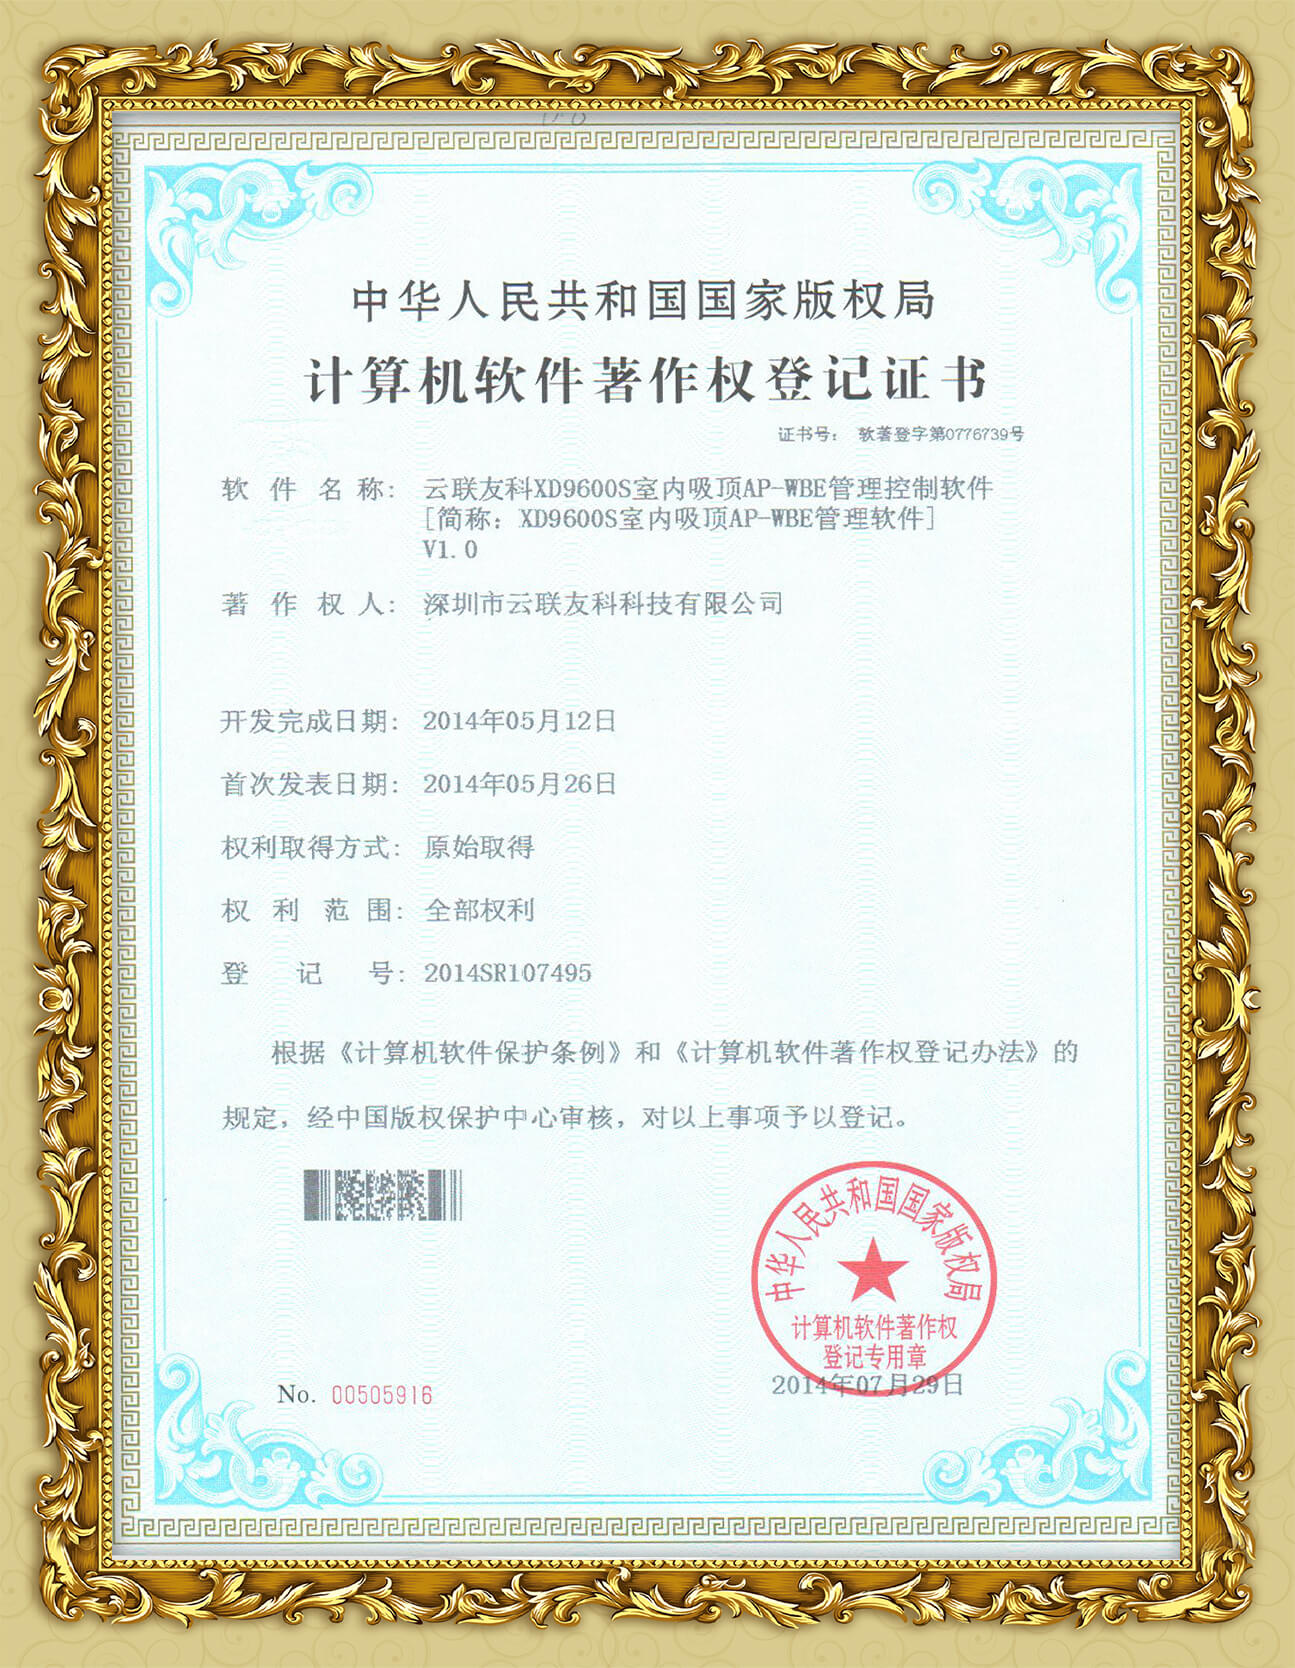 Software registration certificate